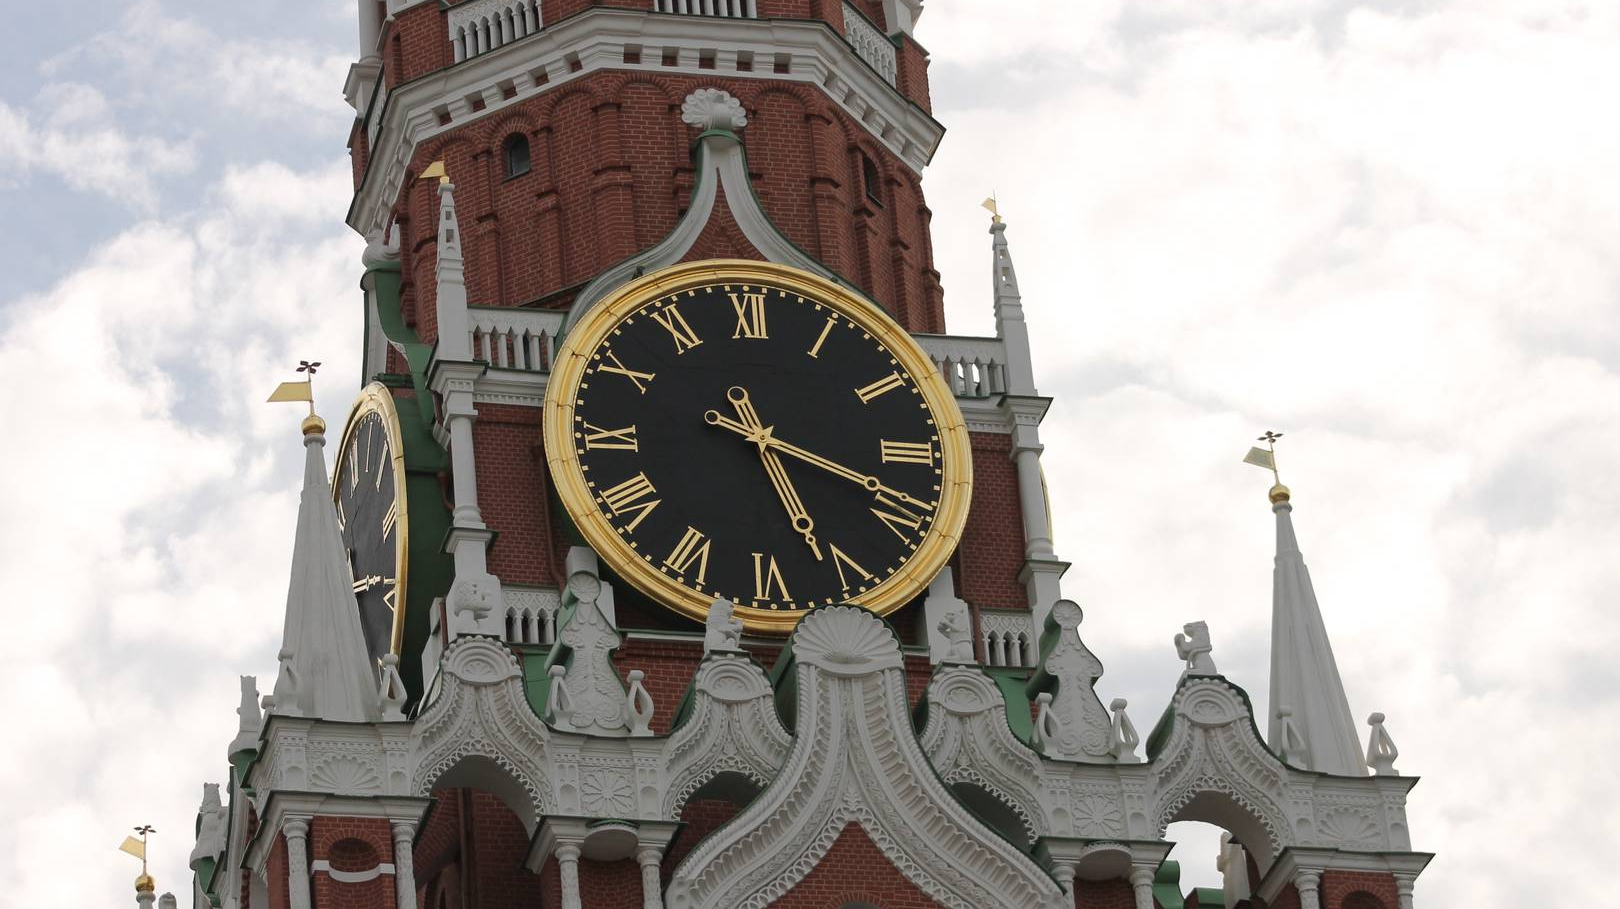 Кремль. Куранты Спасской башни. Москва